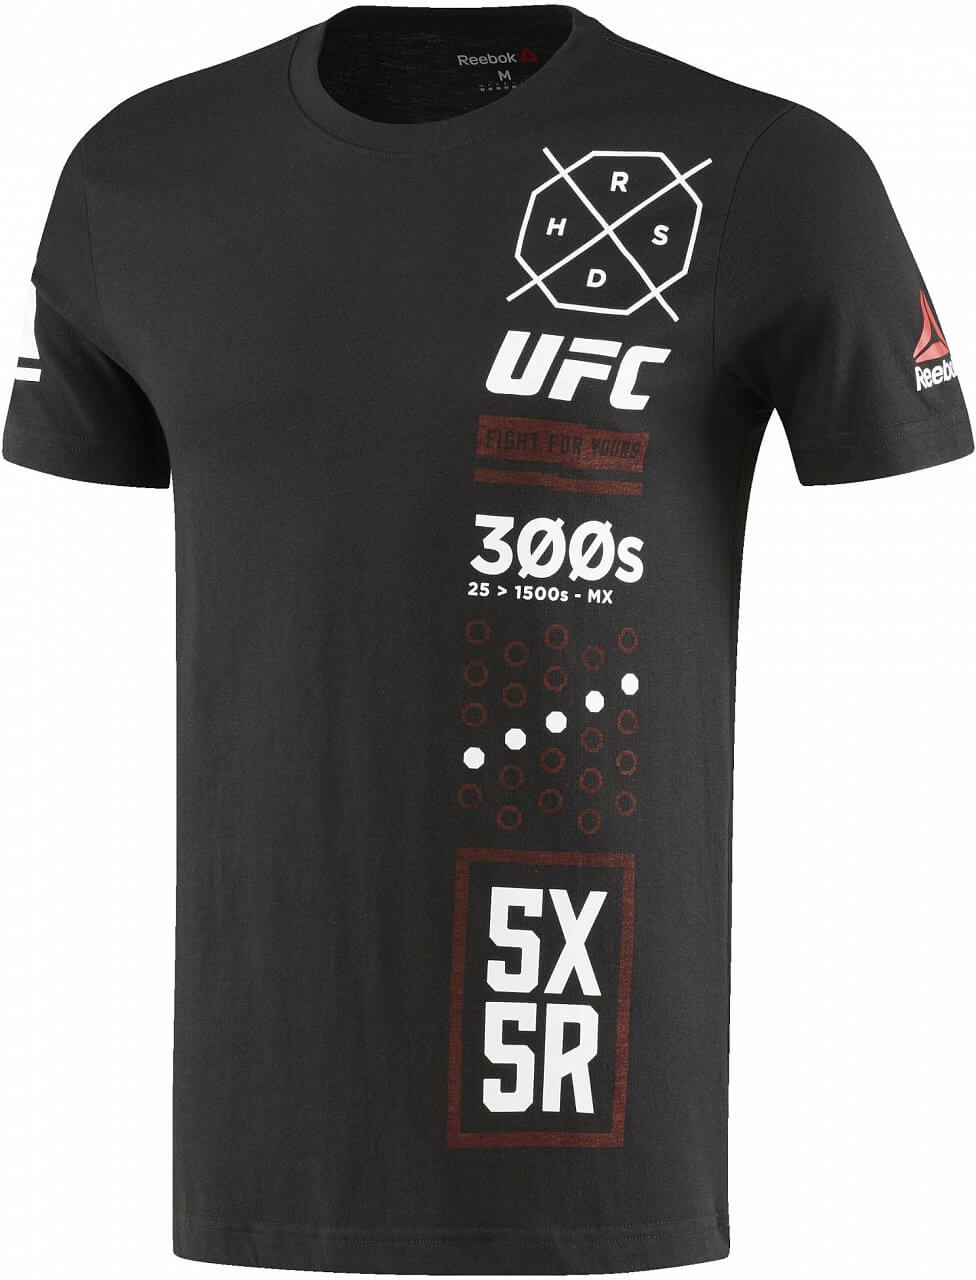 Pánské sportovní tričko Reebok UFC FG 5X5R Tee